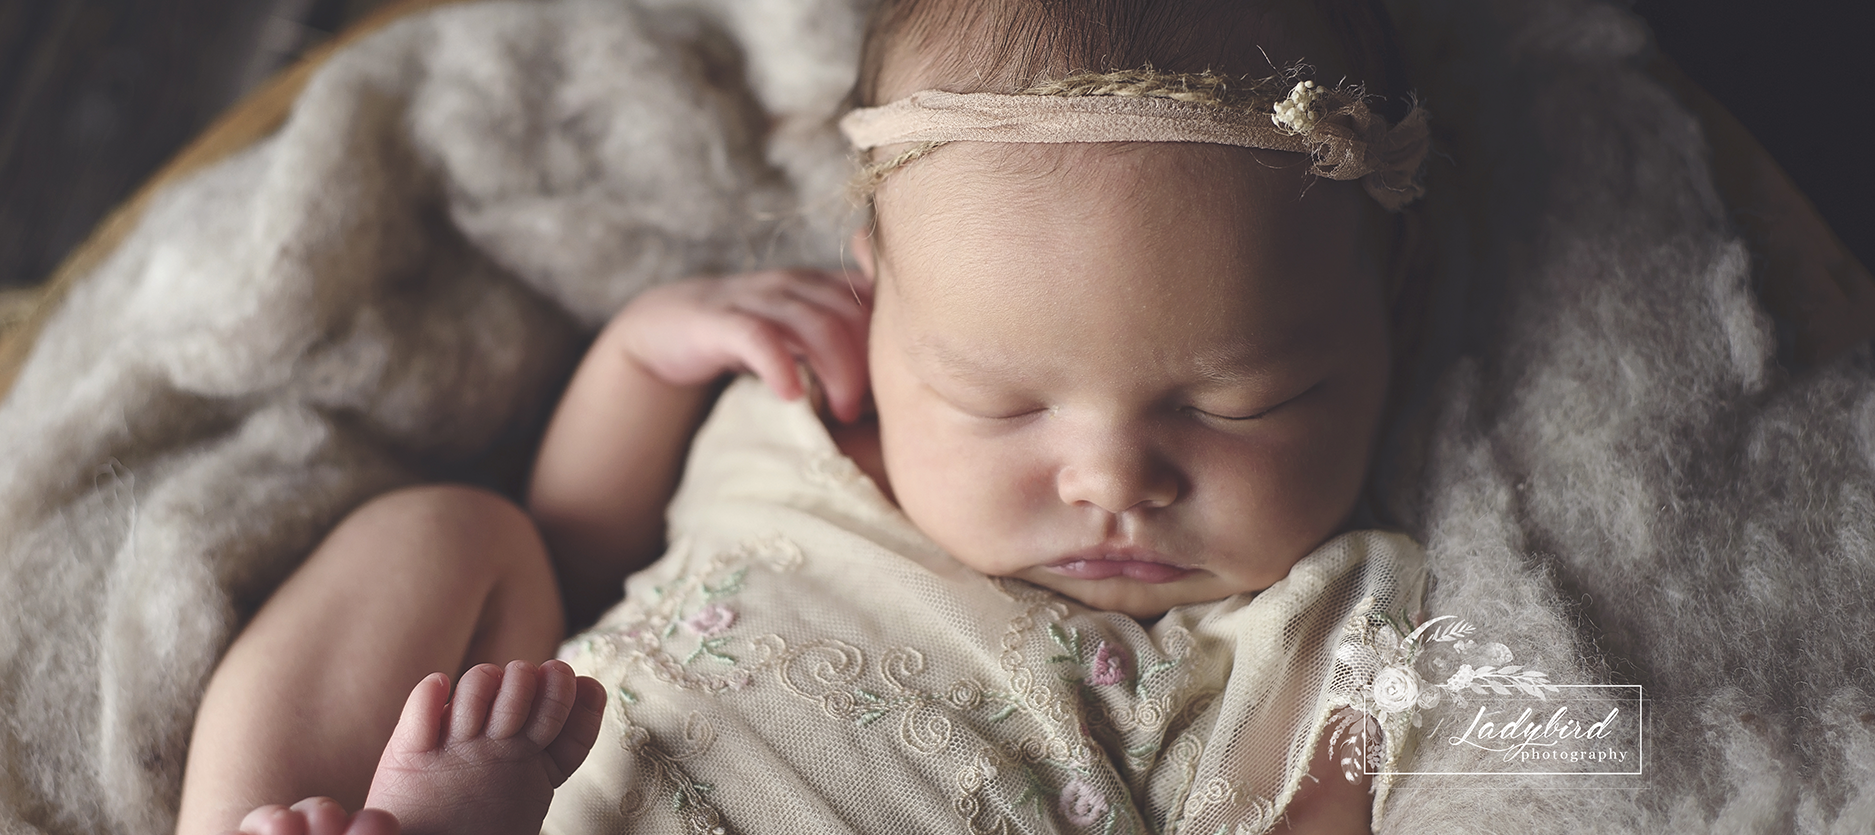 edmonton-baby-newborn-photographer-photography-photos-pictures-14.png